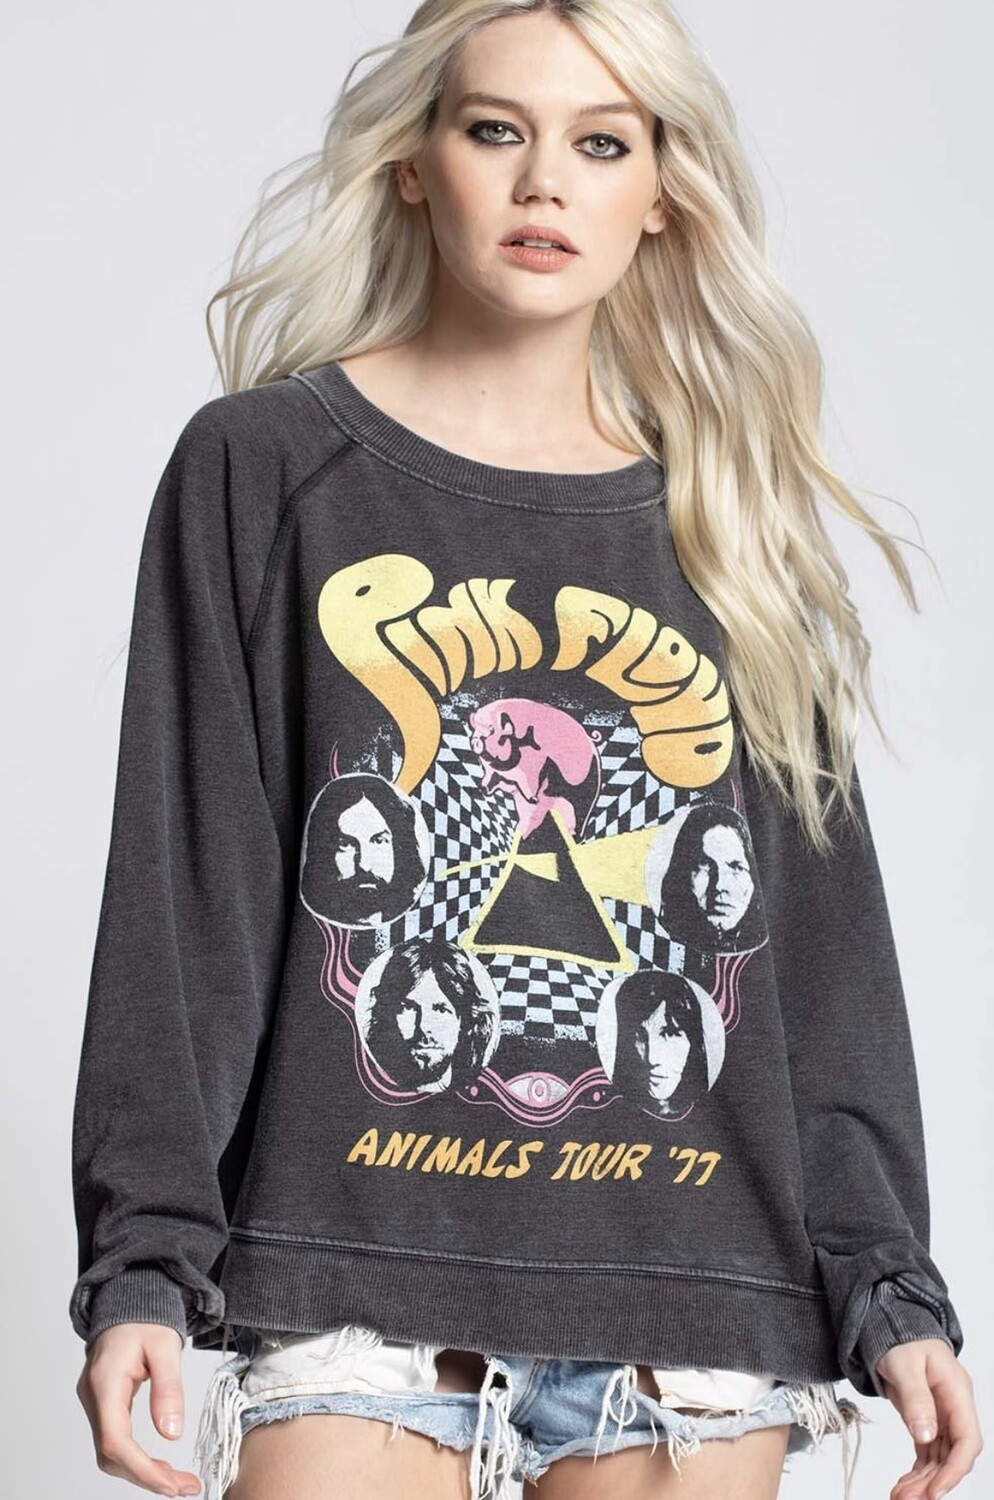 Recycled Karma Pink Floyd Animals Tour ls sweatshirt, color: black, Size: XS